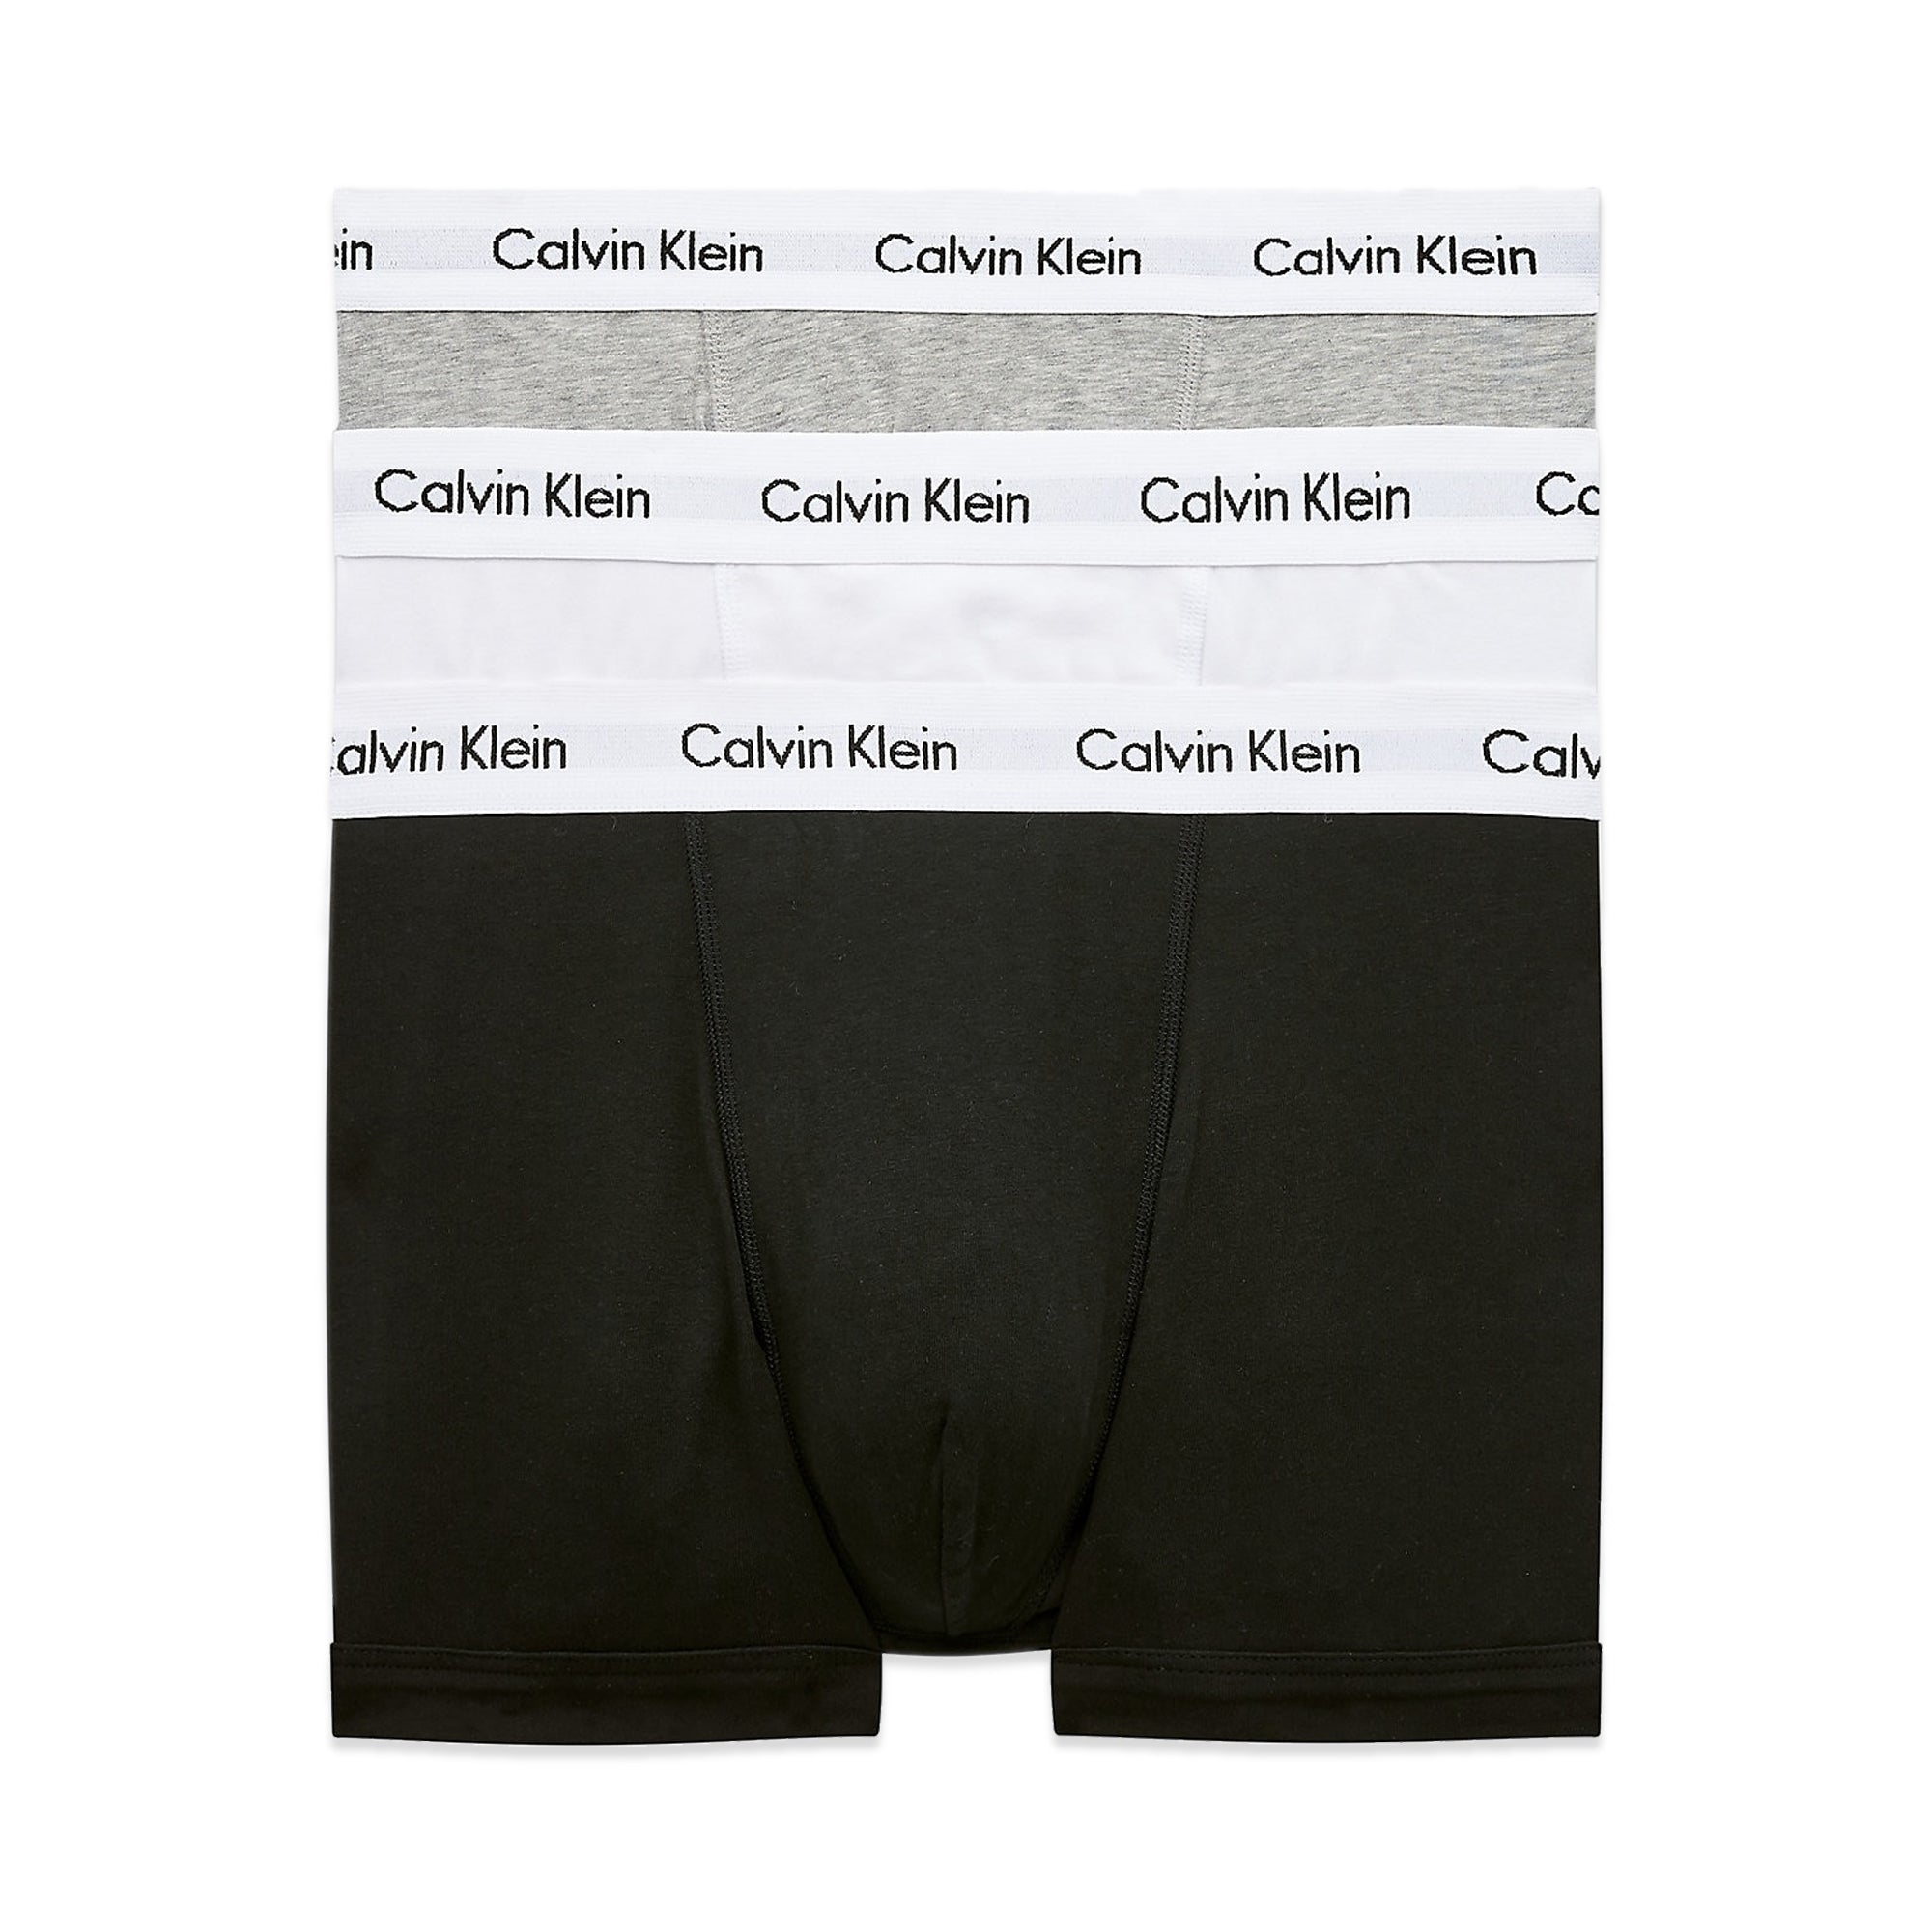 Calvin Klein Low Rise Cotton Stretch Trunks - Black/White/Grey